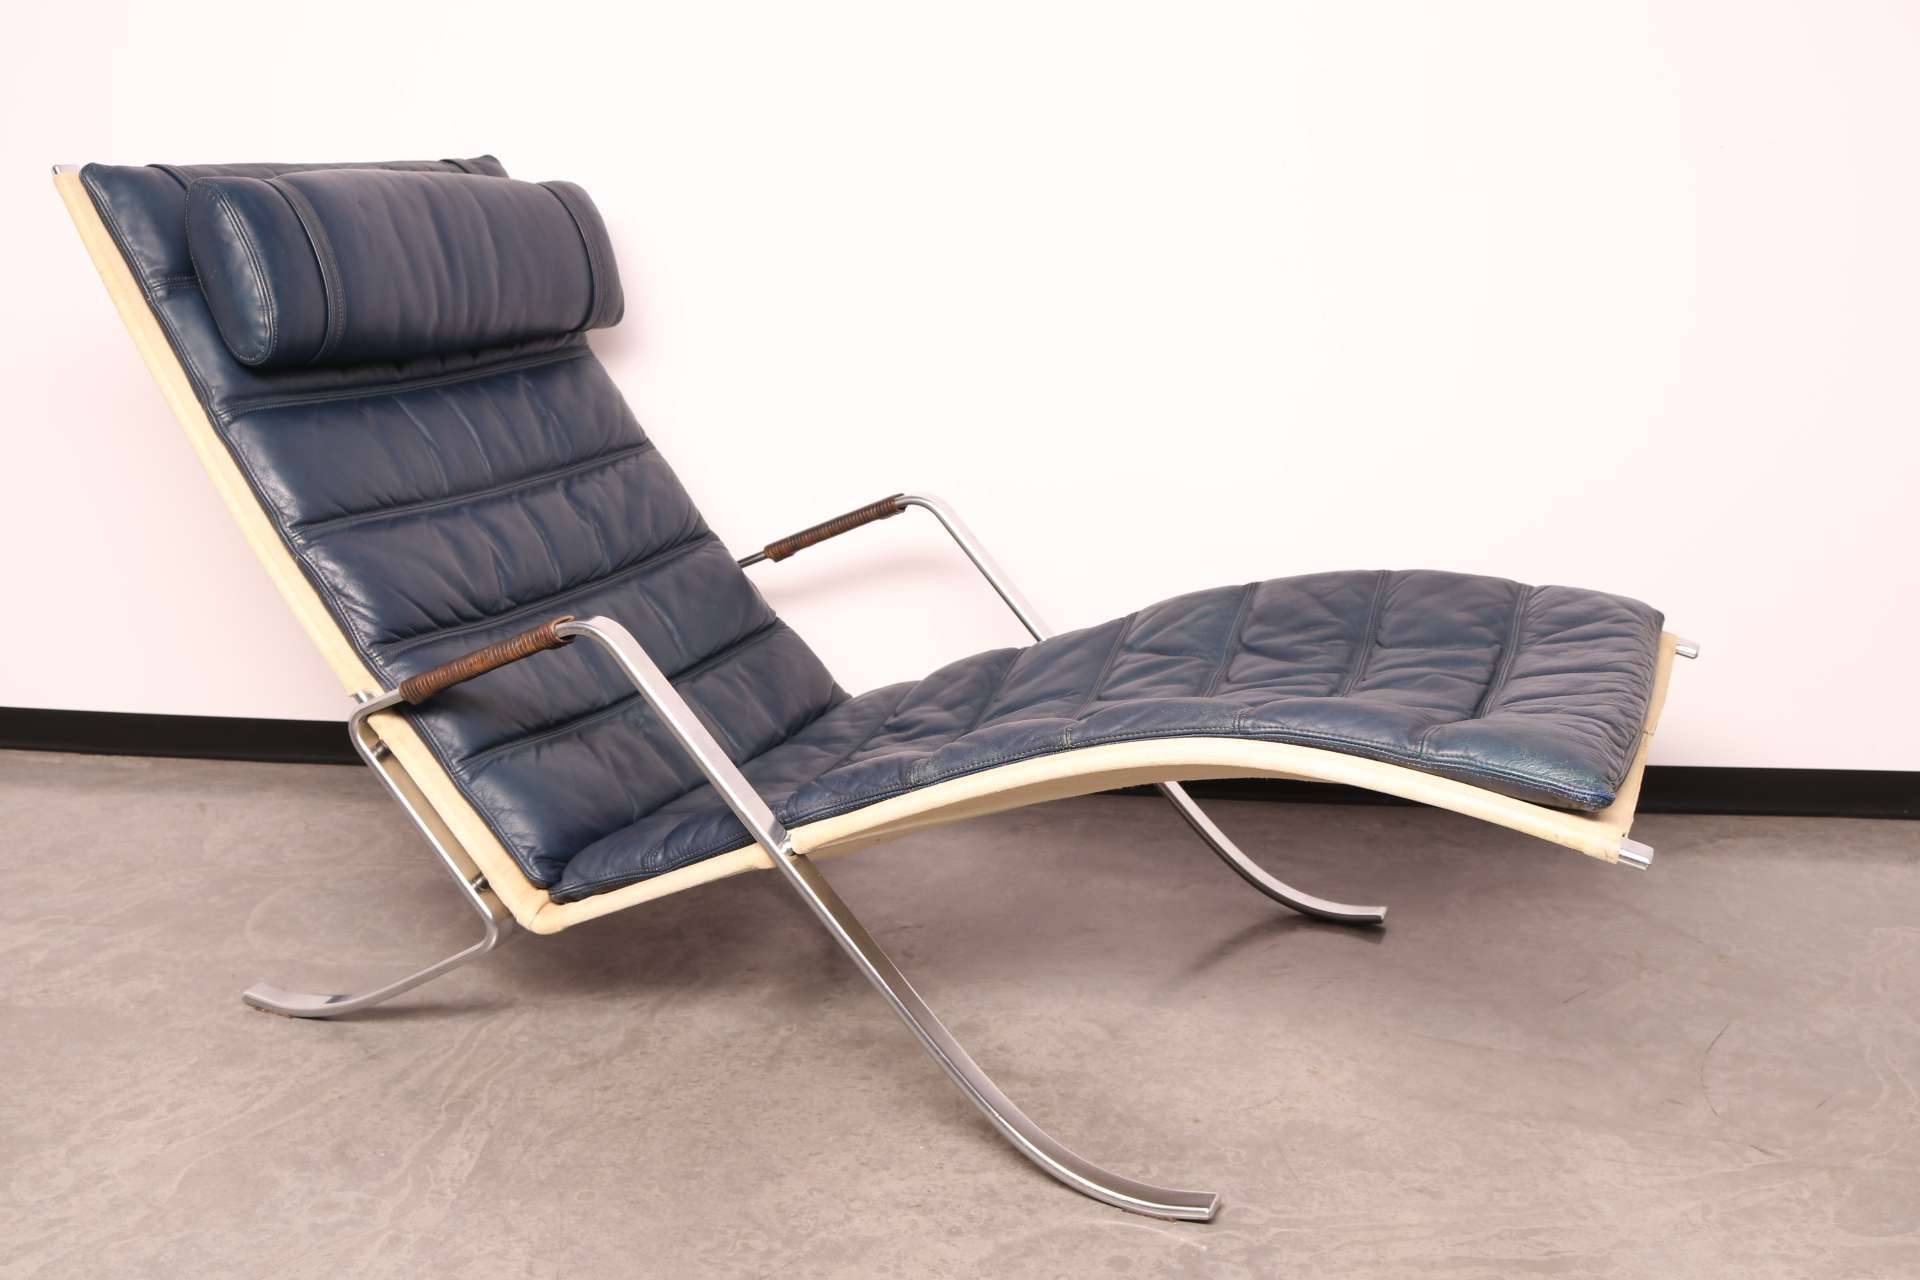 Grasshopper lounge chair vintage FK 87 Danish design iconic rare (6)